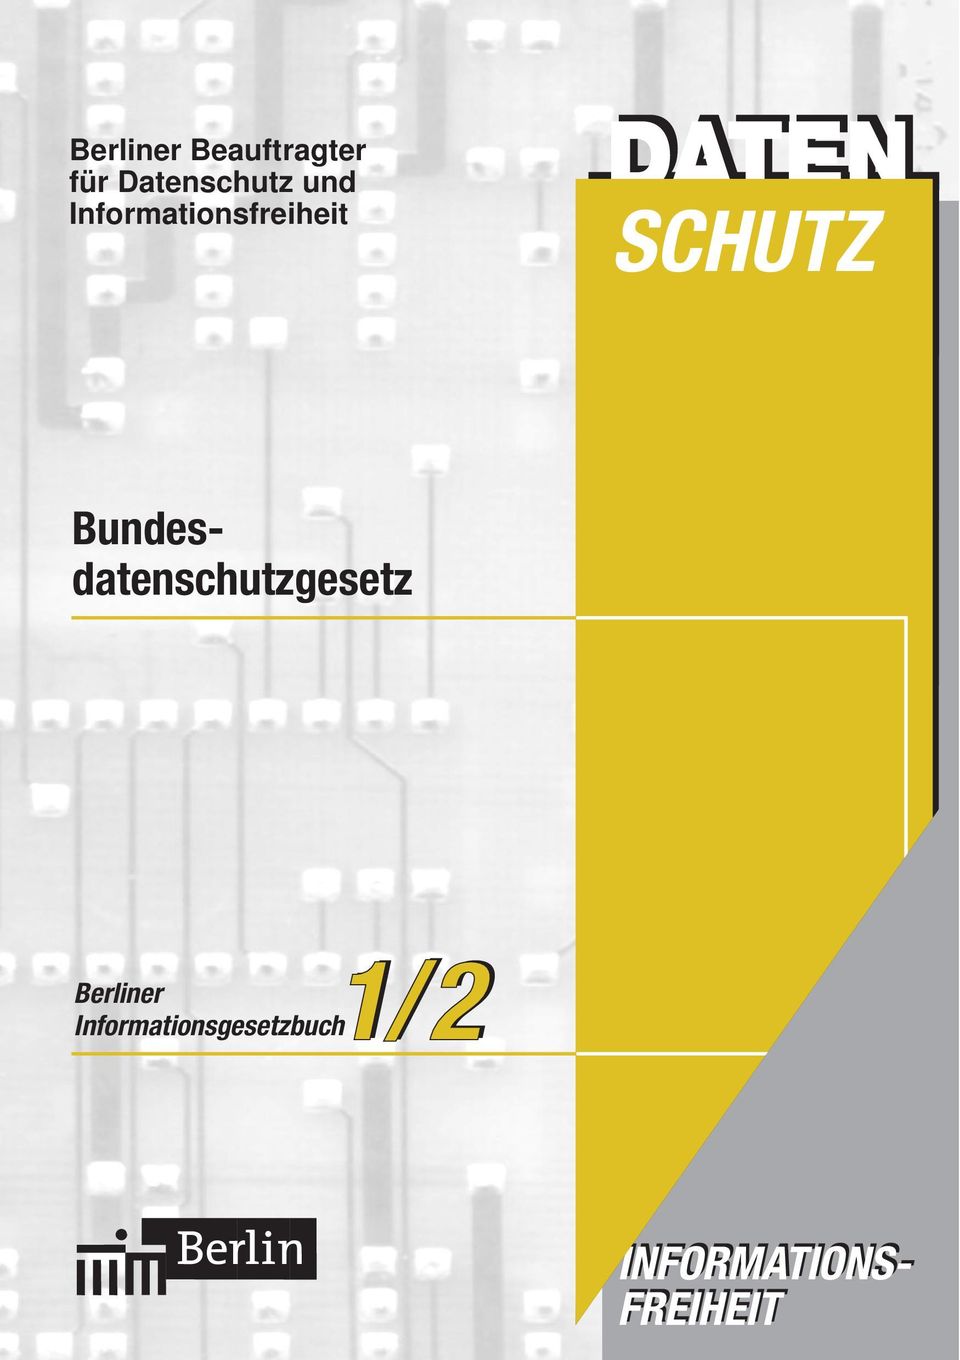 Berliner Informationsgesetzbuch 1/ 2